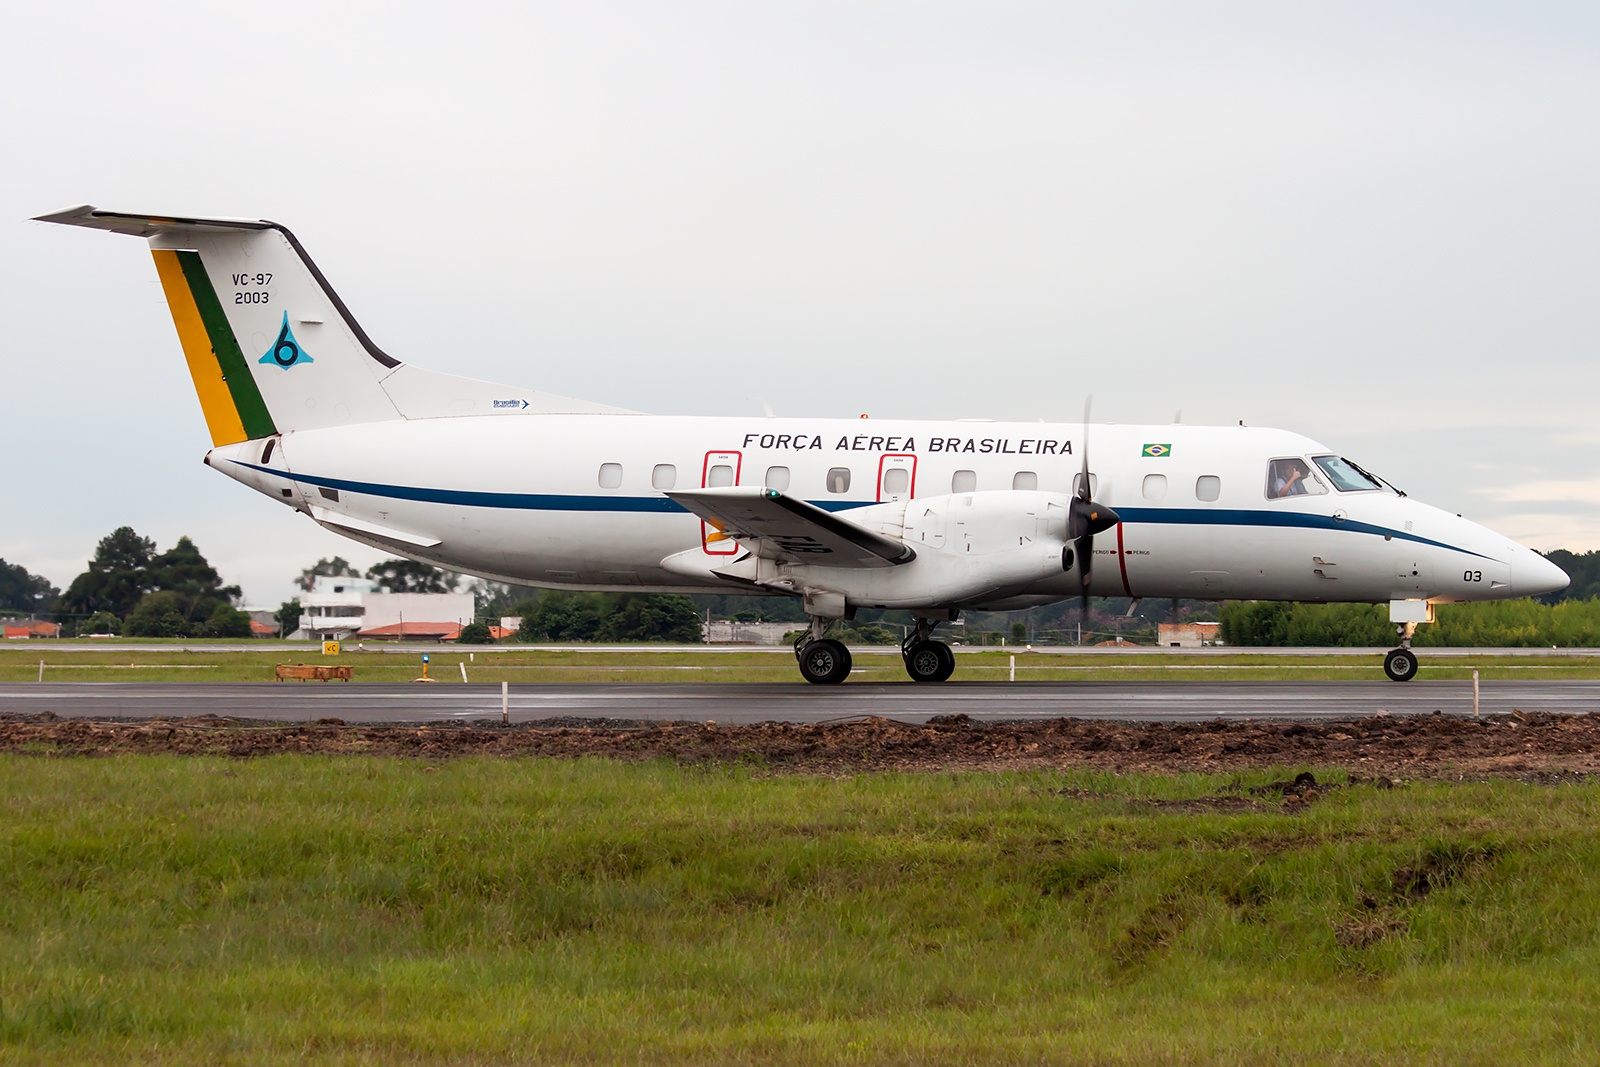 FAB2003 - Embraer VC-97 Brasilia